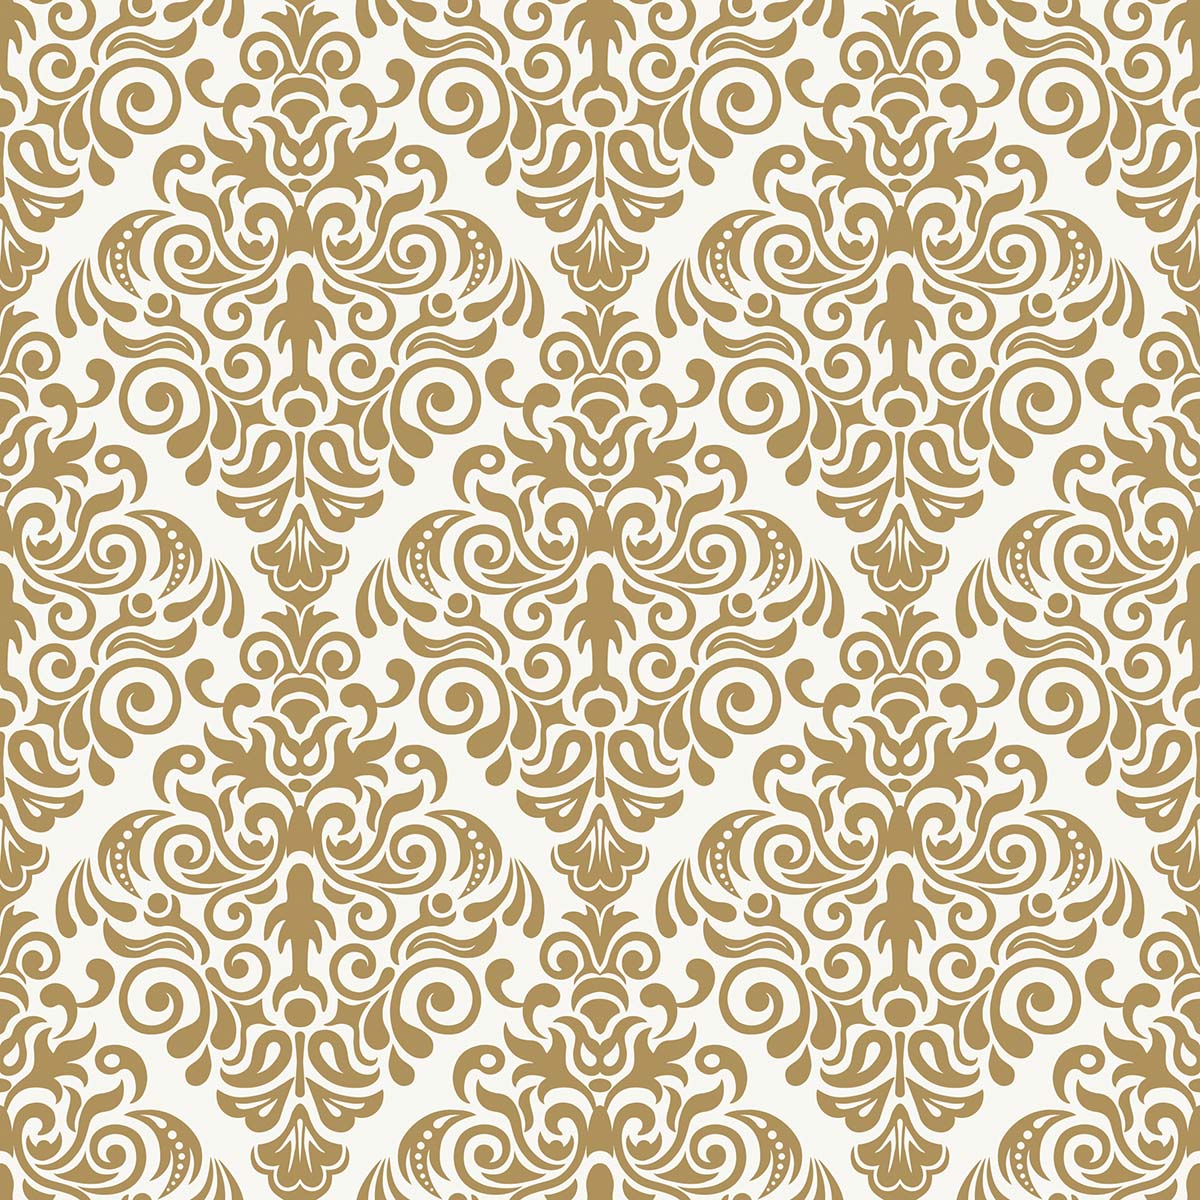 A pattern of gold and white swirls